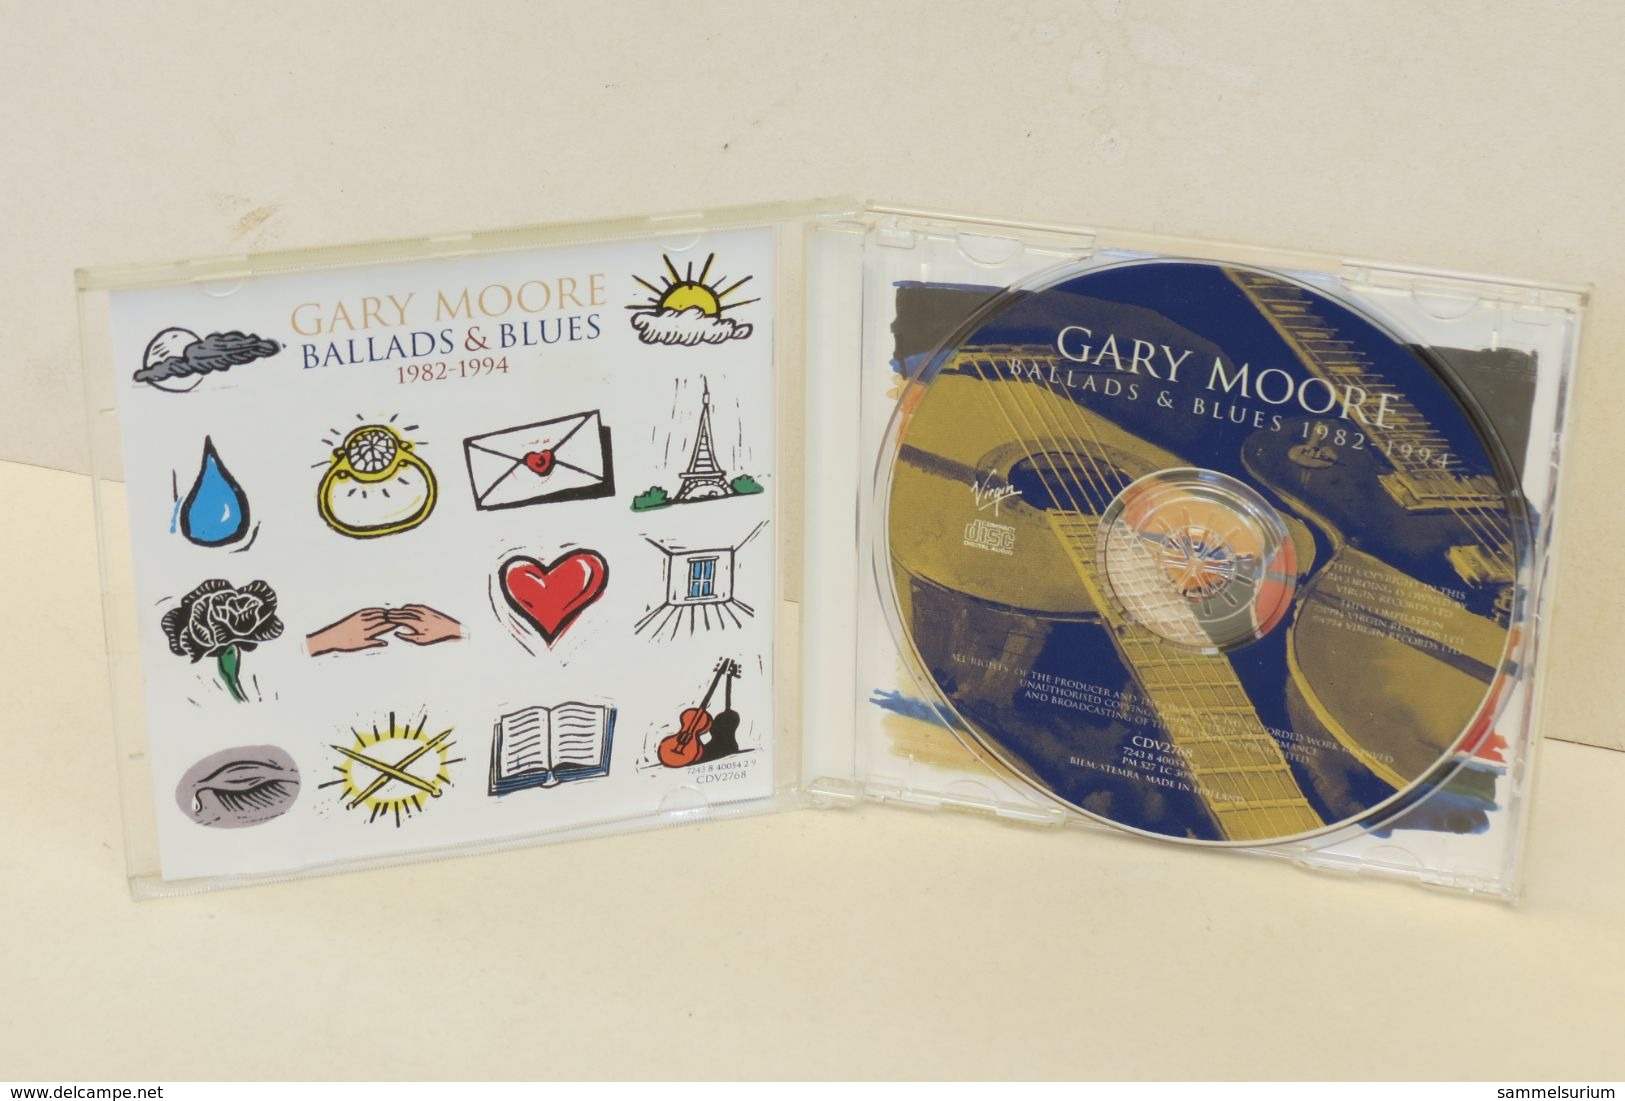 CD "Gary Moore" 1982 Ballads & Blues 1994 - Blues